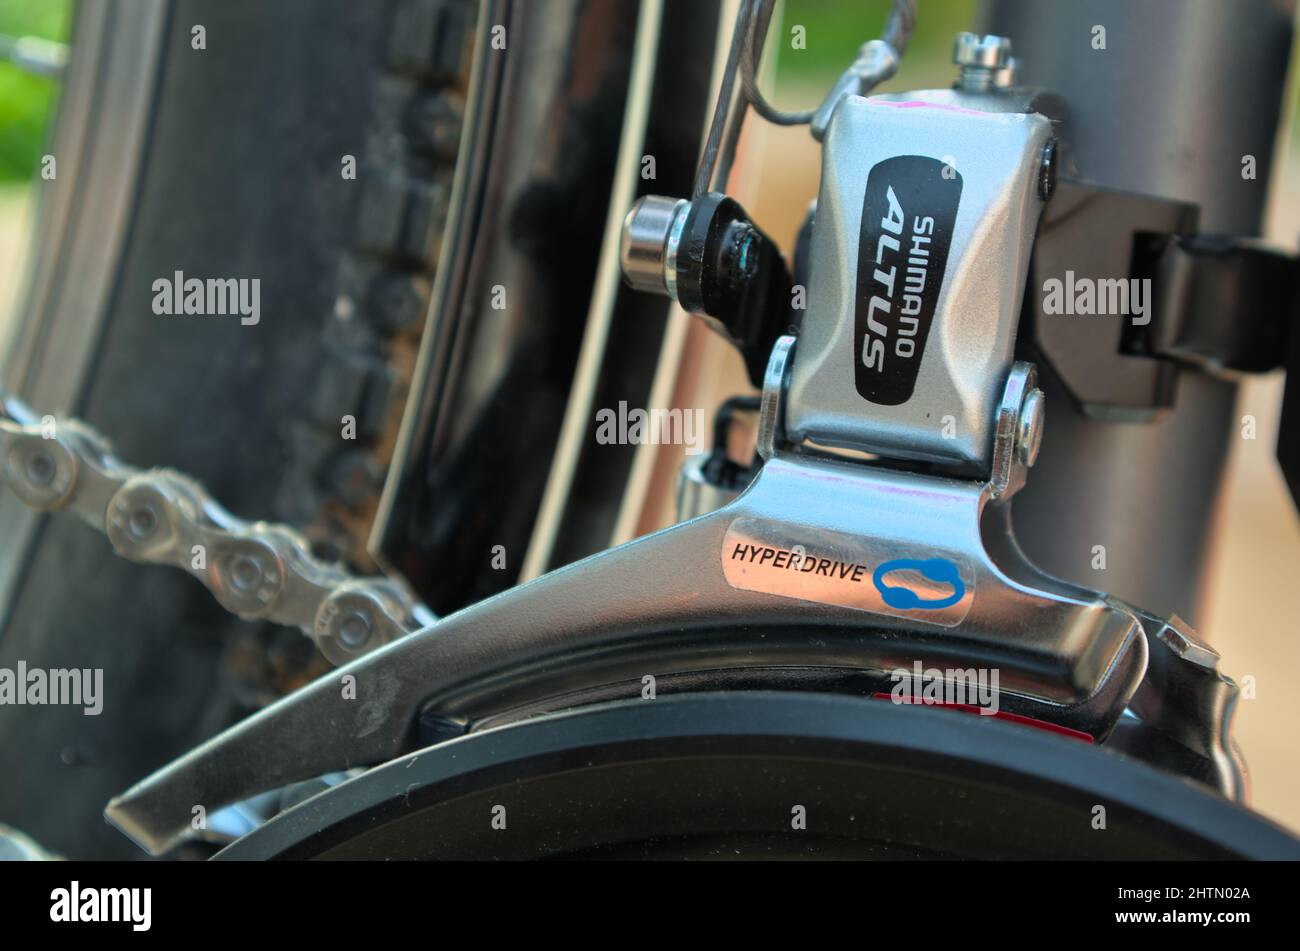 Shimano Altus front derailleur. Bicycle components Stock Photo